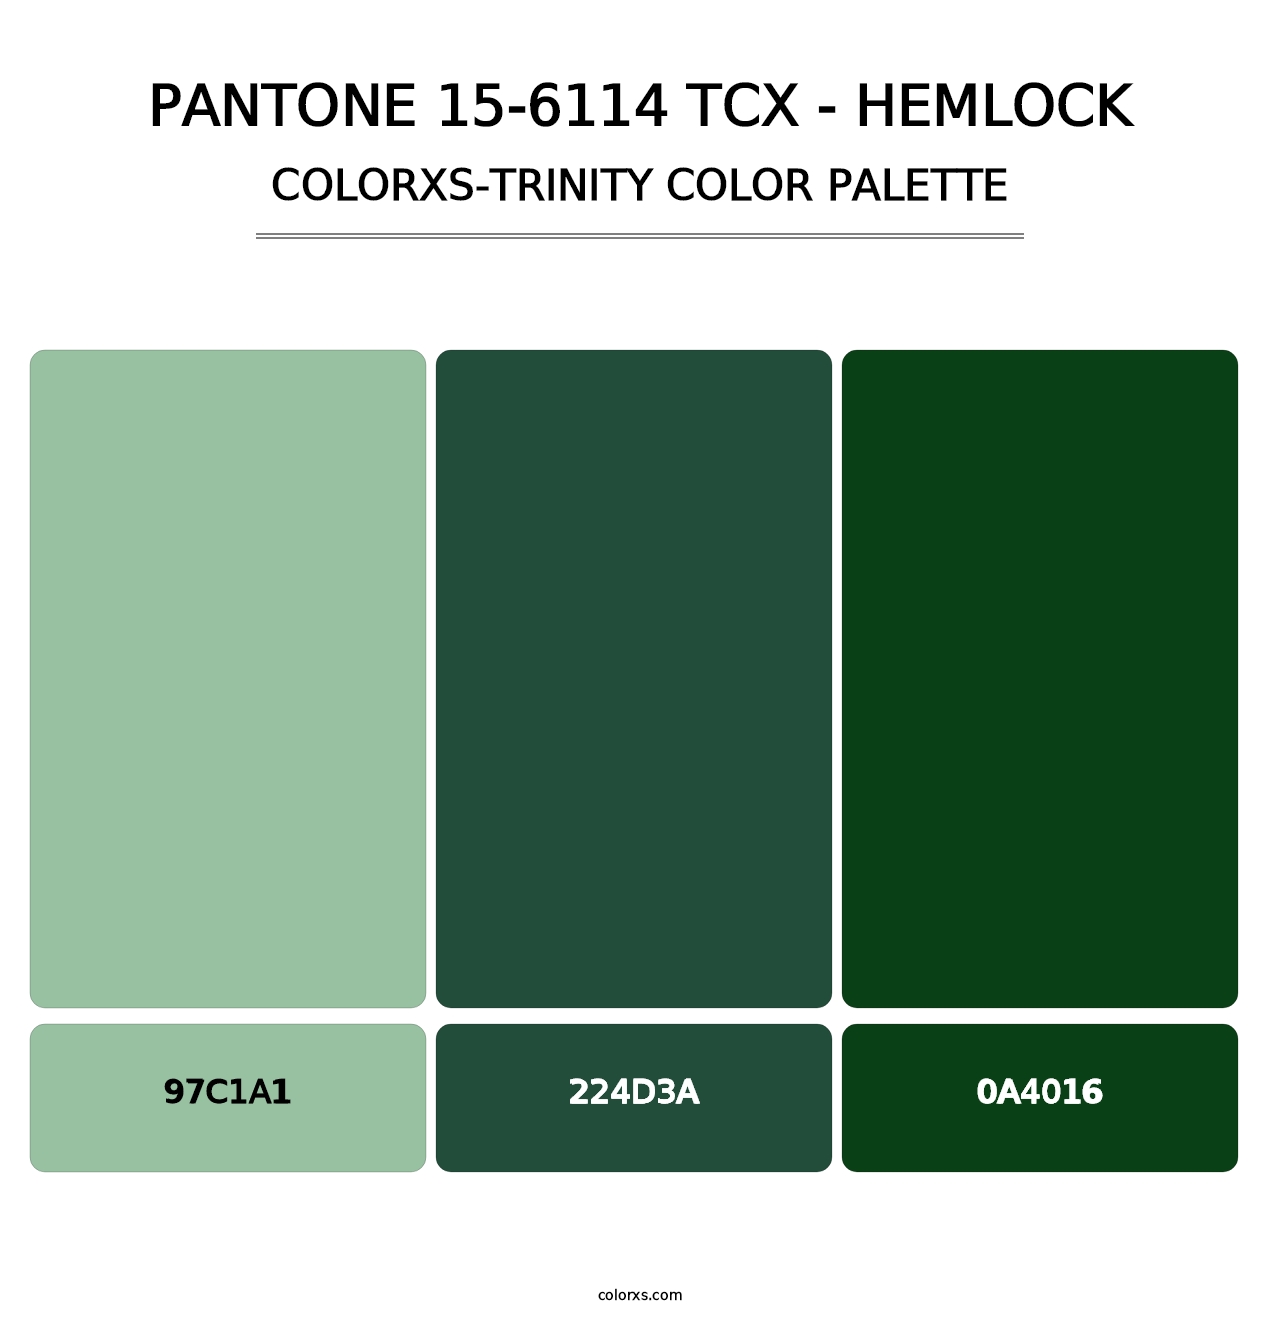 PANTONE 15-6114 TCX - Hemlock - Colorxs Trinity Palette